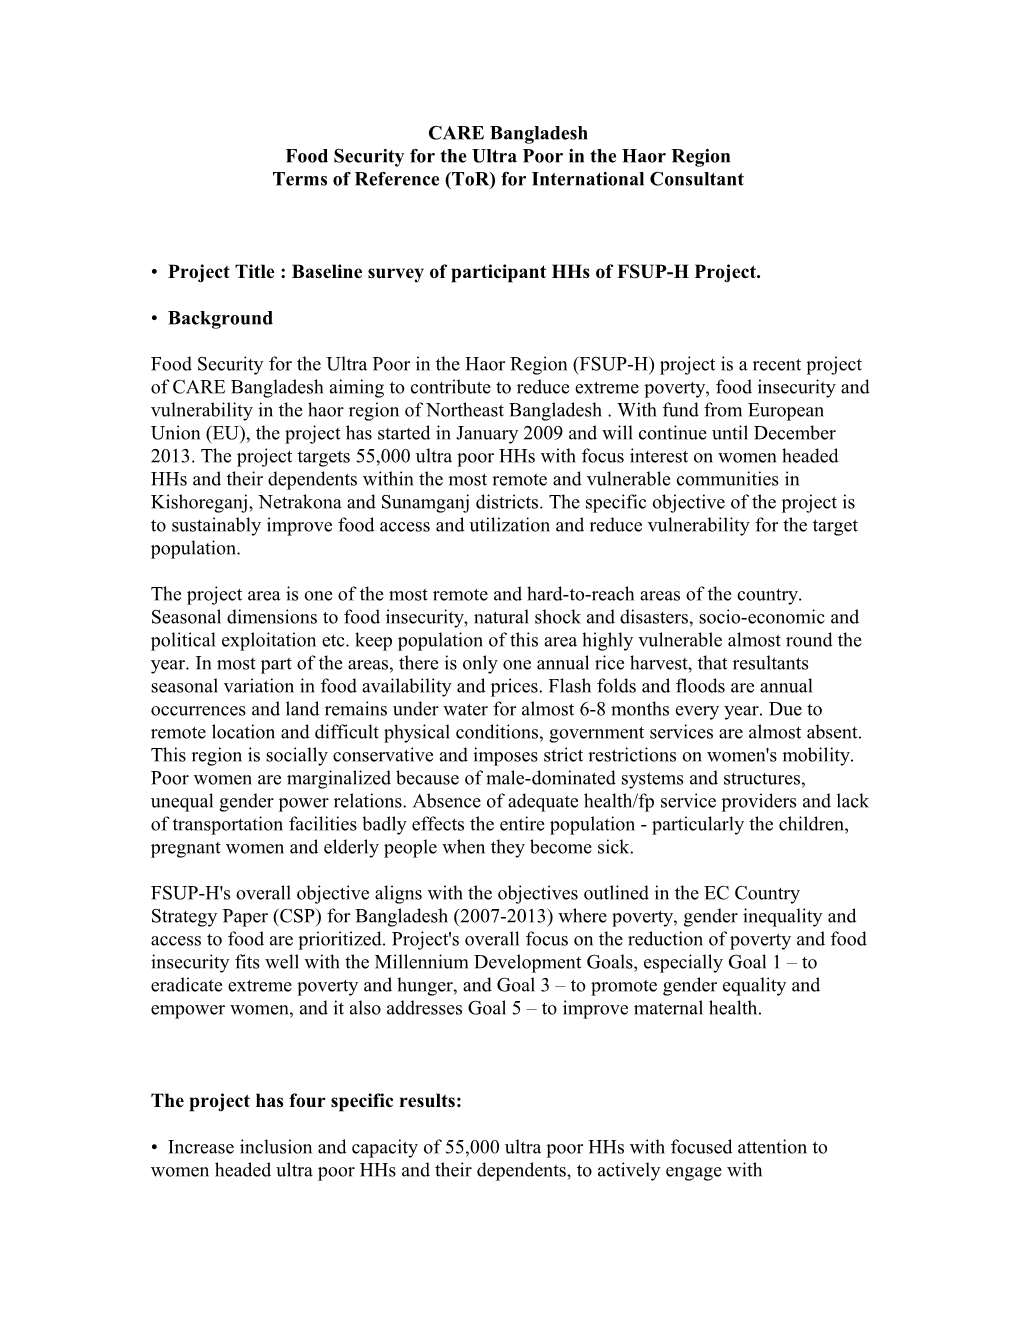 Project Title : Baseline Survey of Participant Hhs of FSUP-H Project